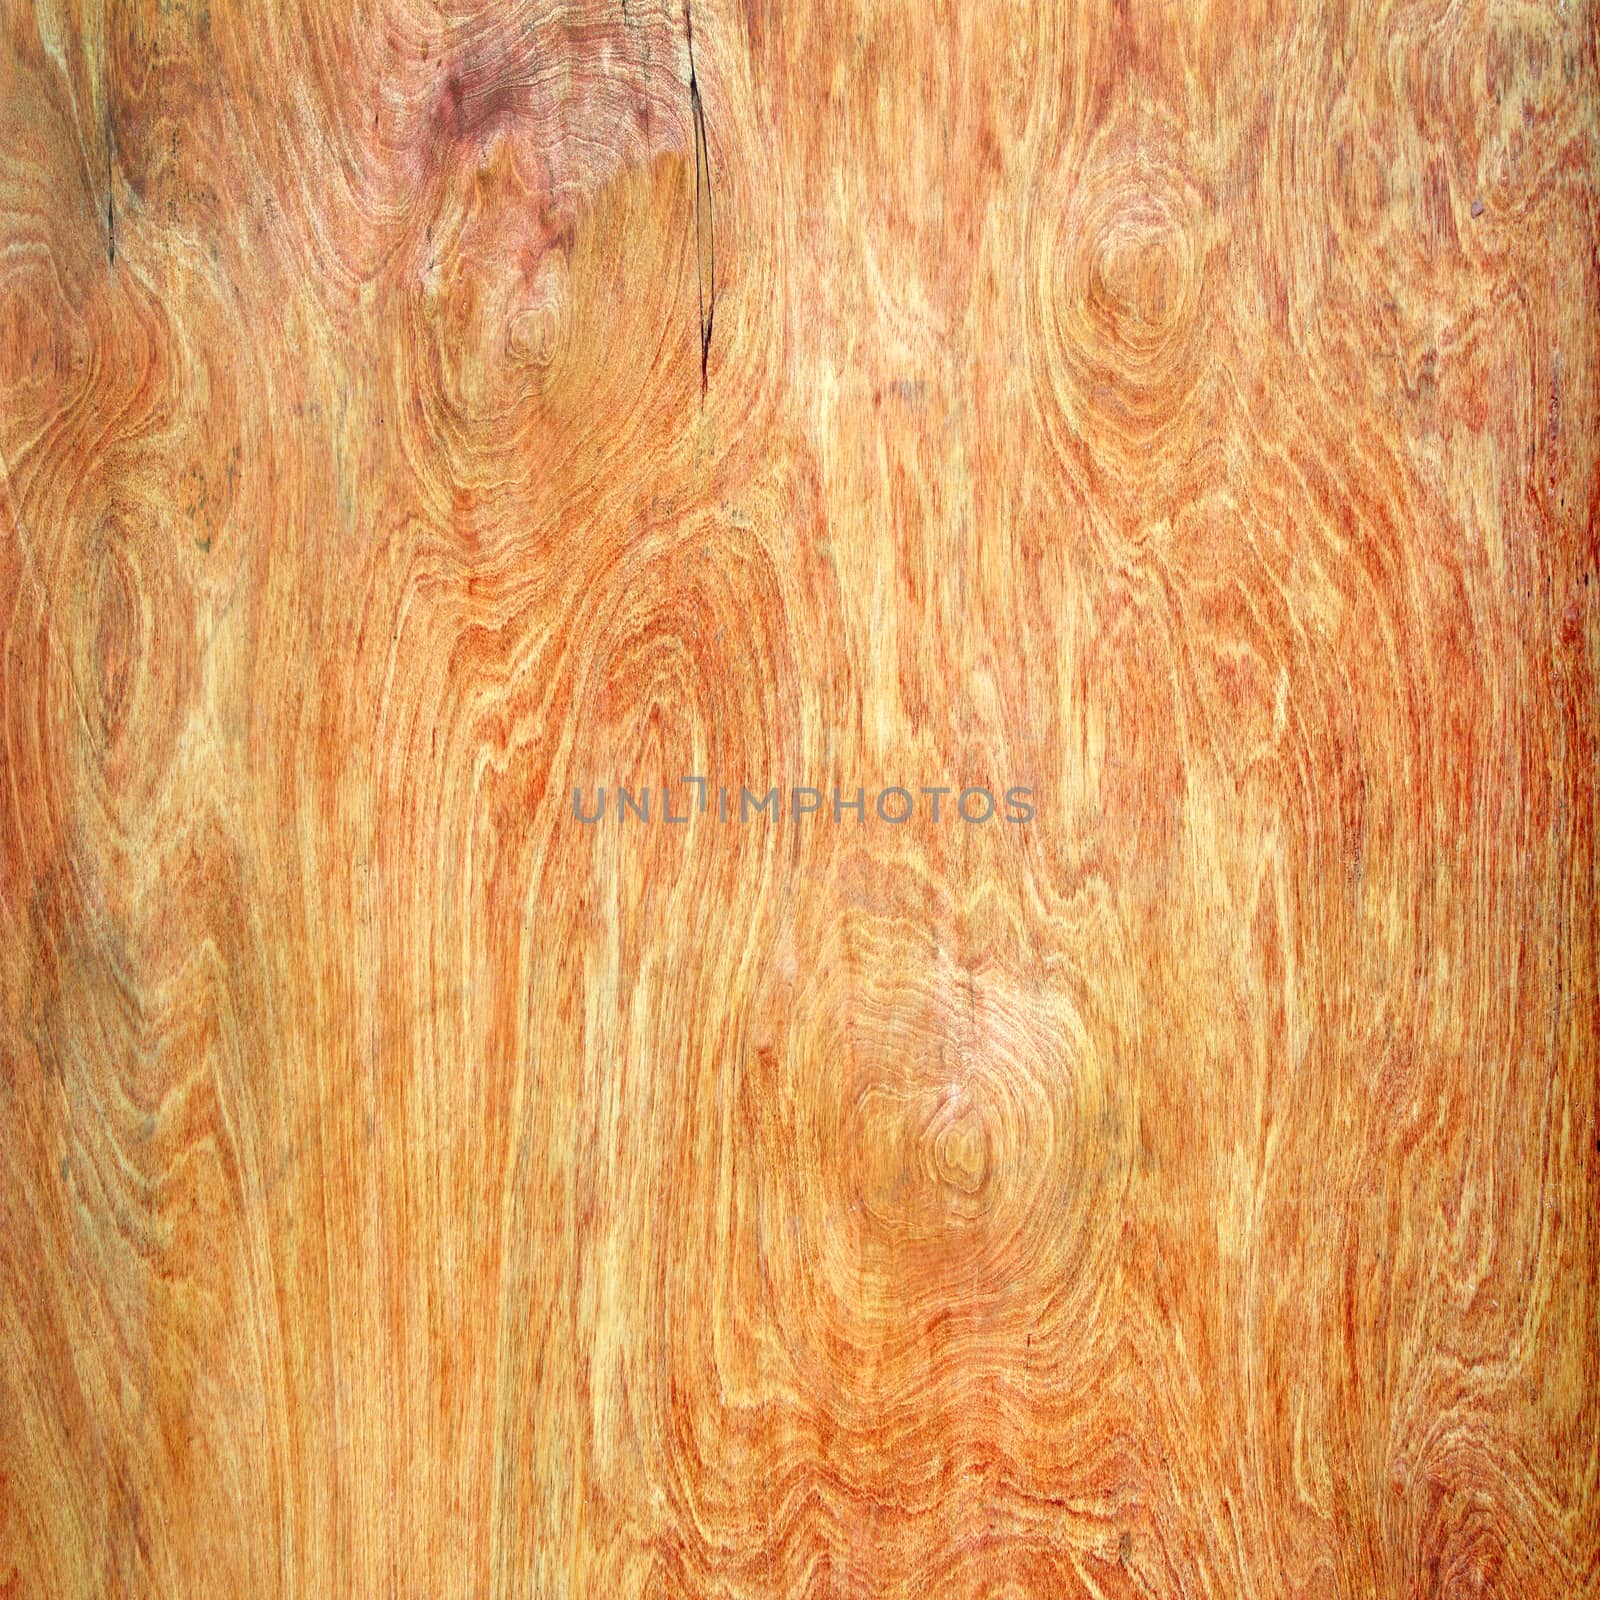 Wood texture by wyoosumran